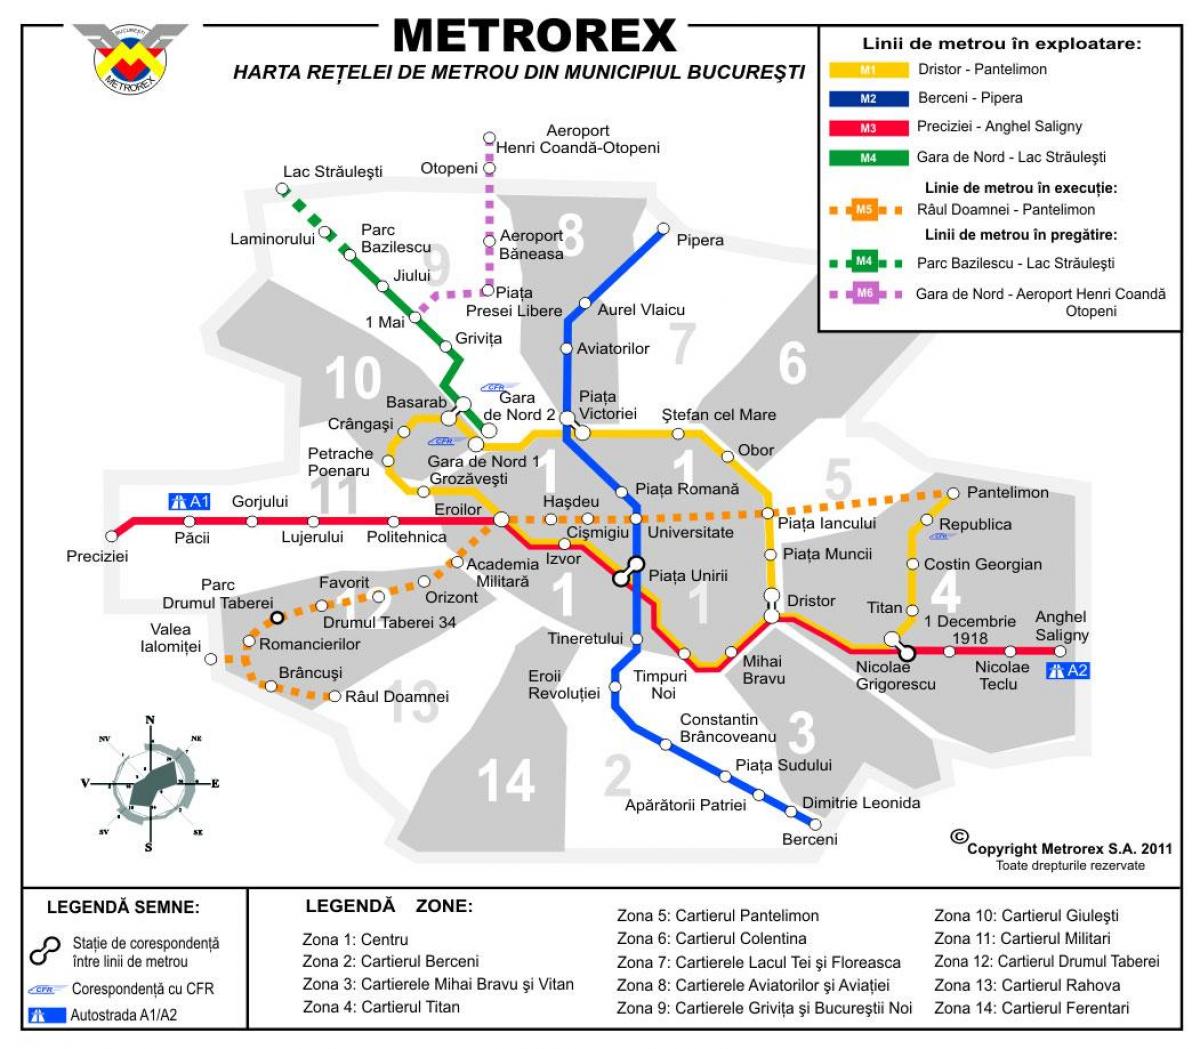 Harta e metrorex 